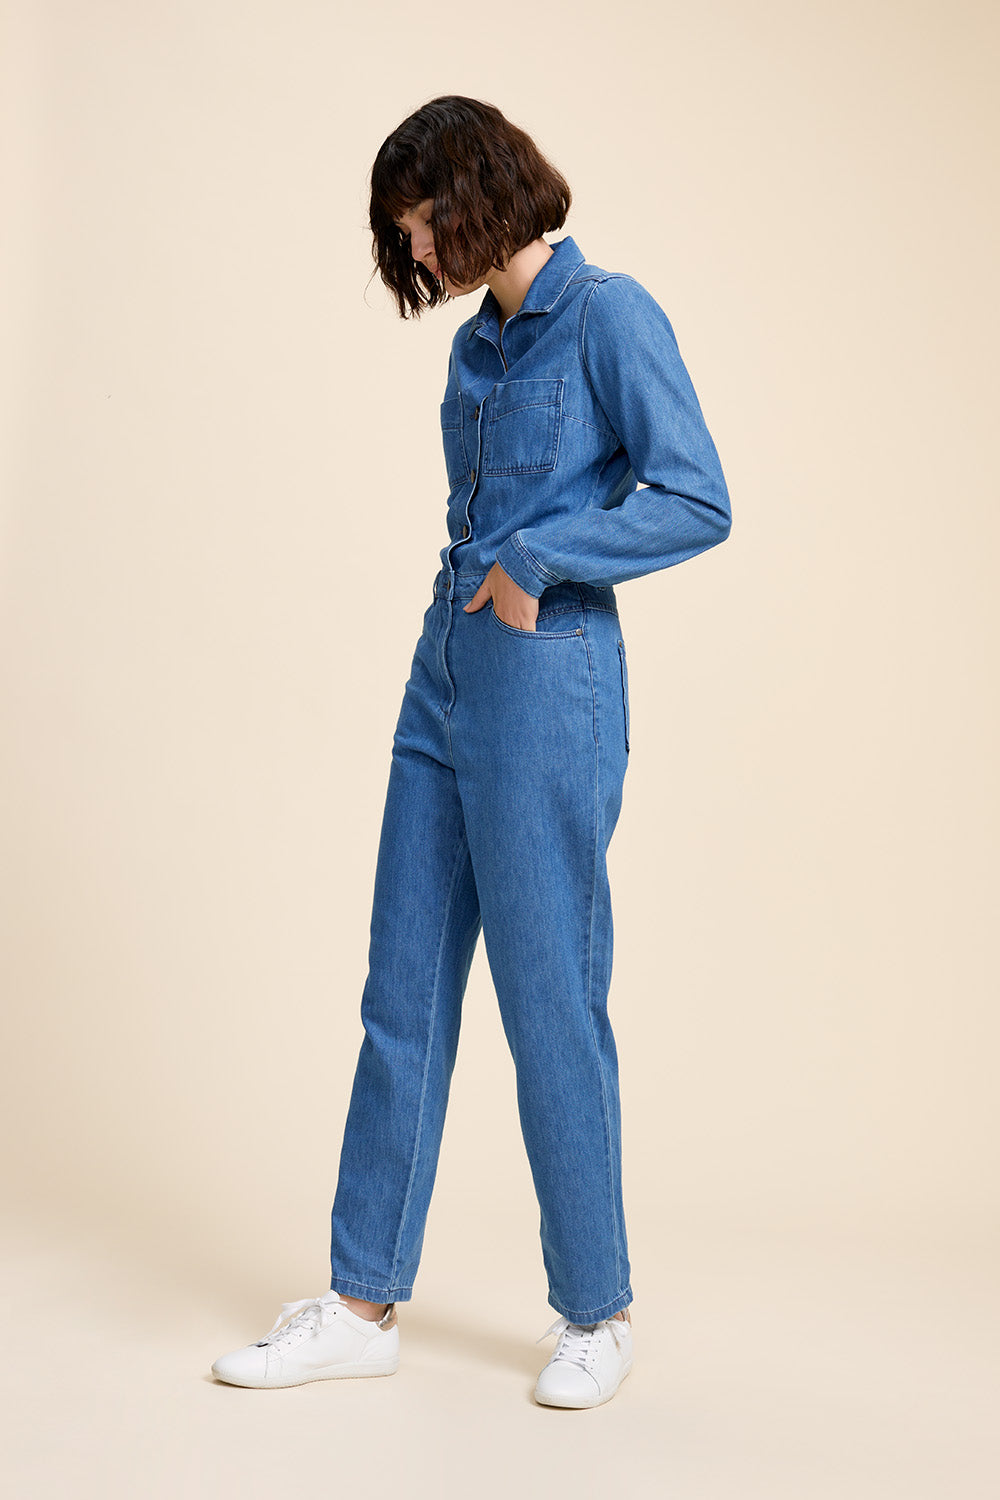 RORY - Combinaison en jean bleu